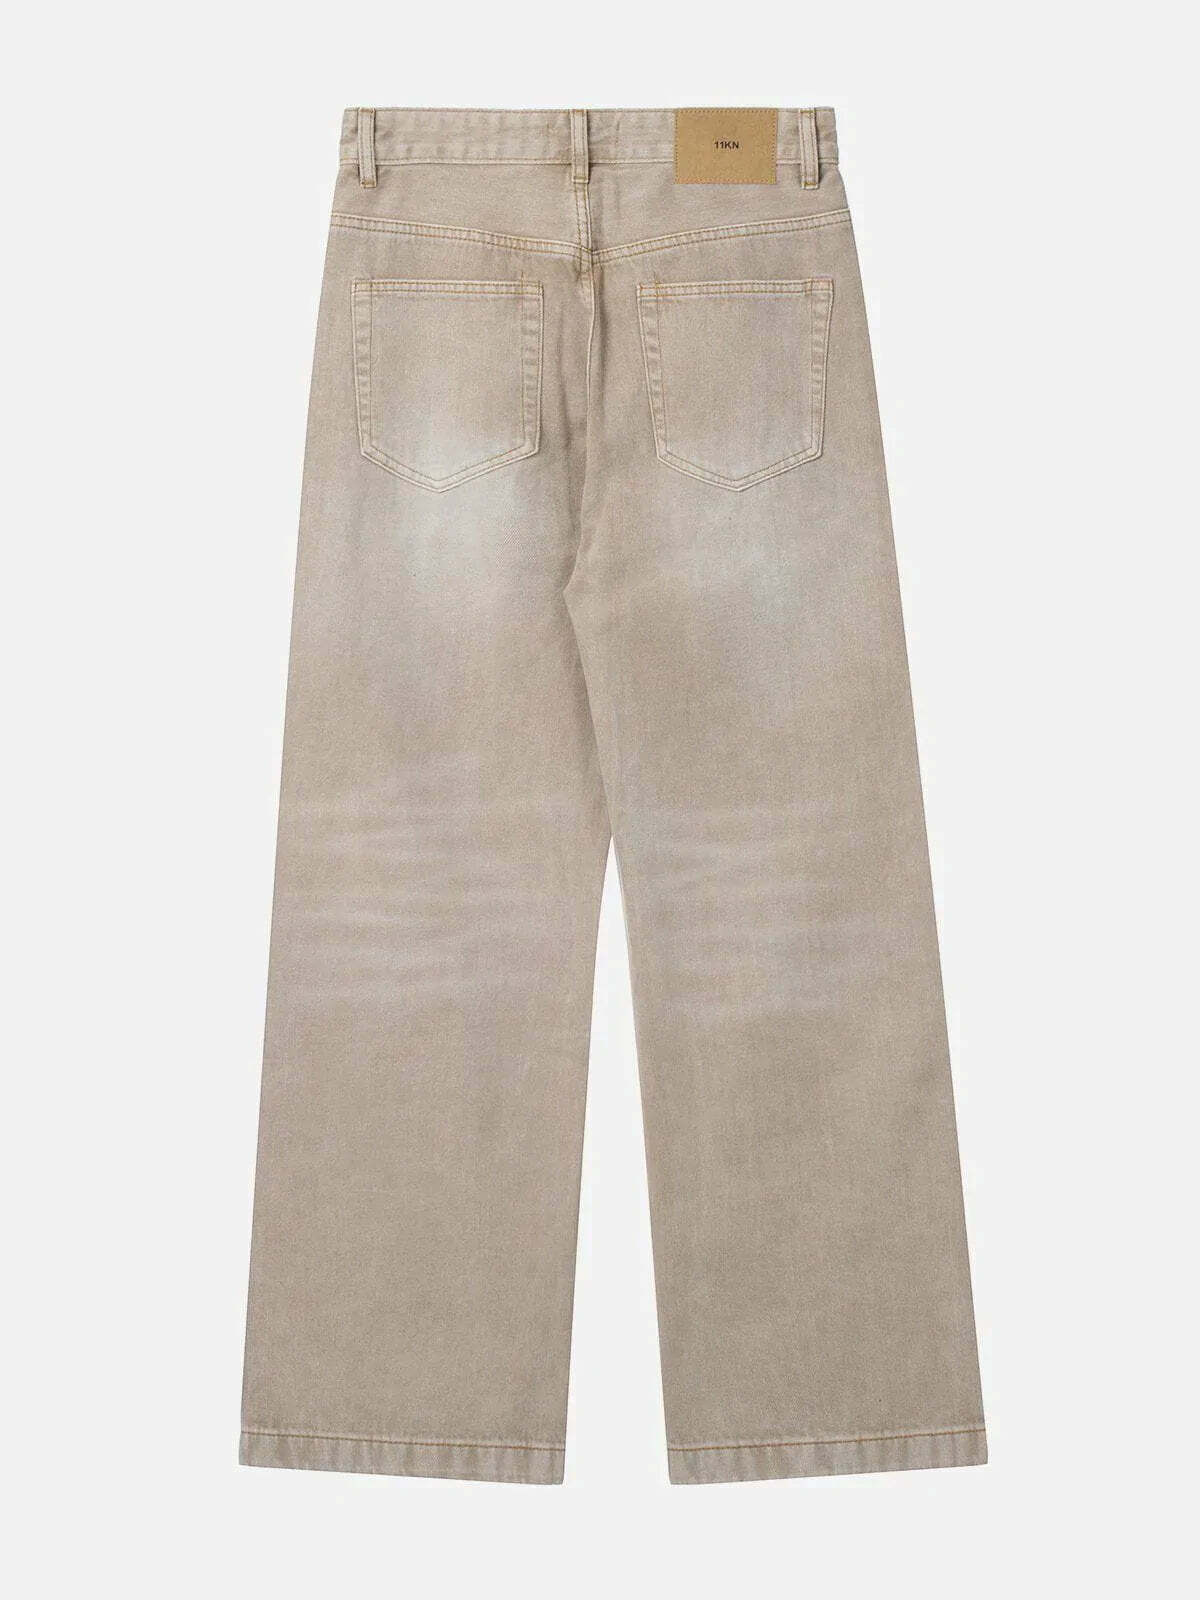 wrinkled washed jeans edgy & urban denim 7163